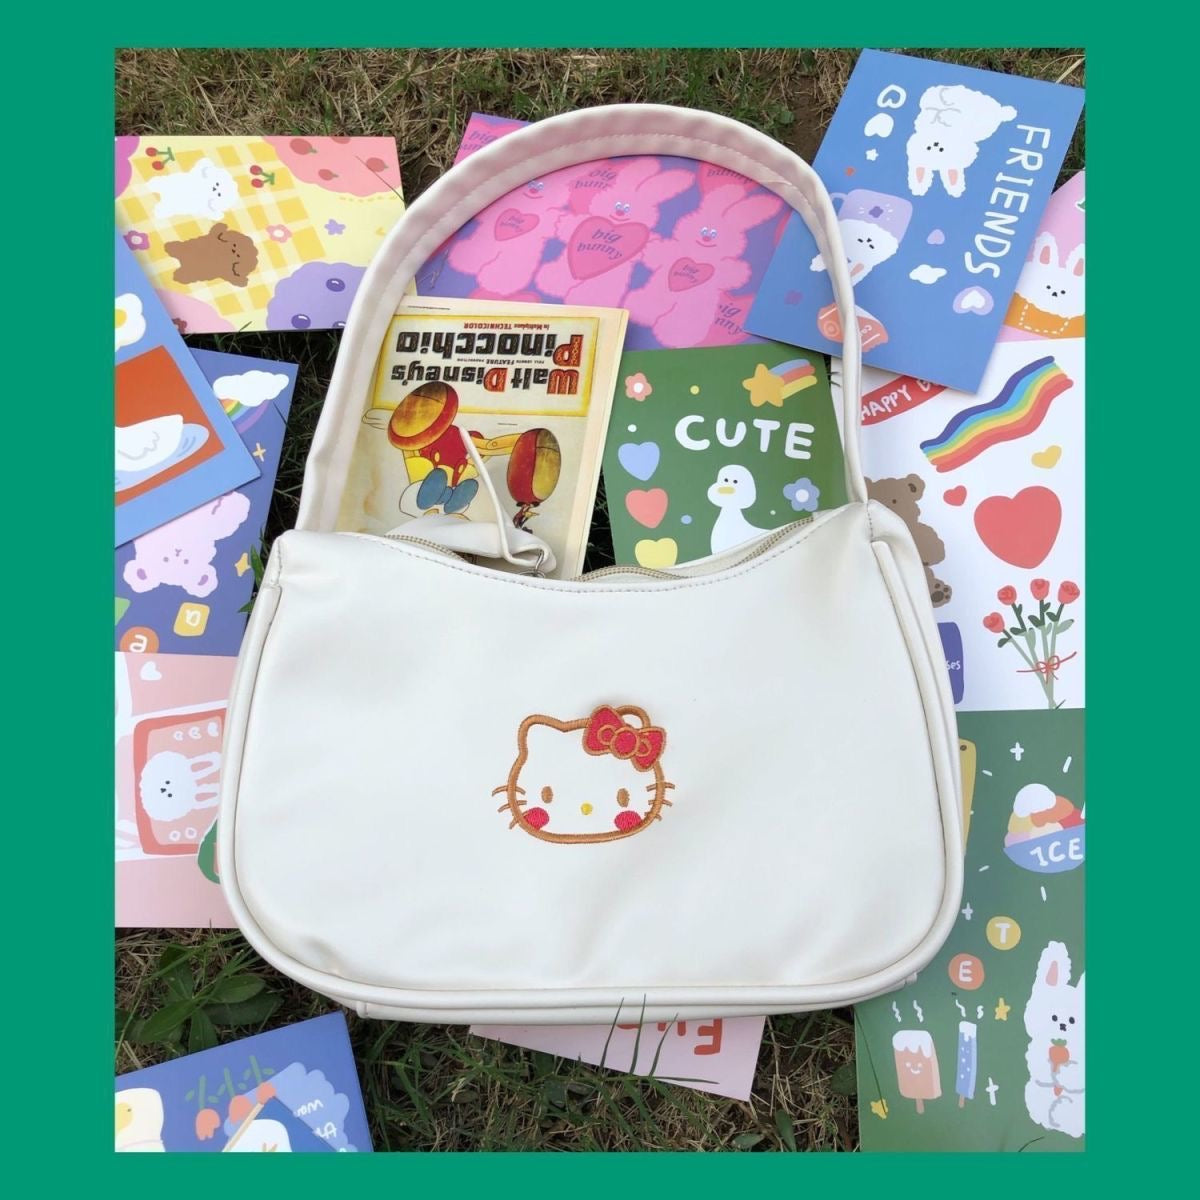 Hello Kitty Inspired Baguette Bag Shoulder Bag Handbag